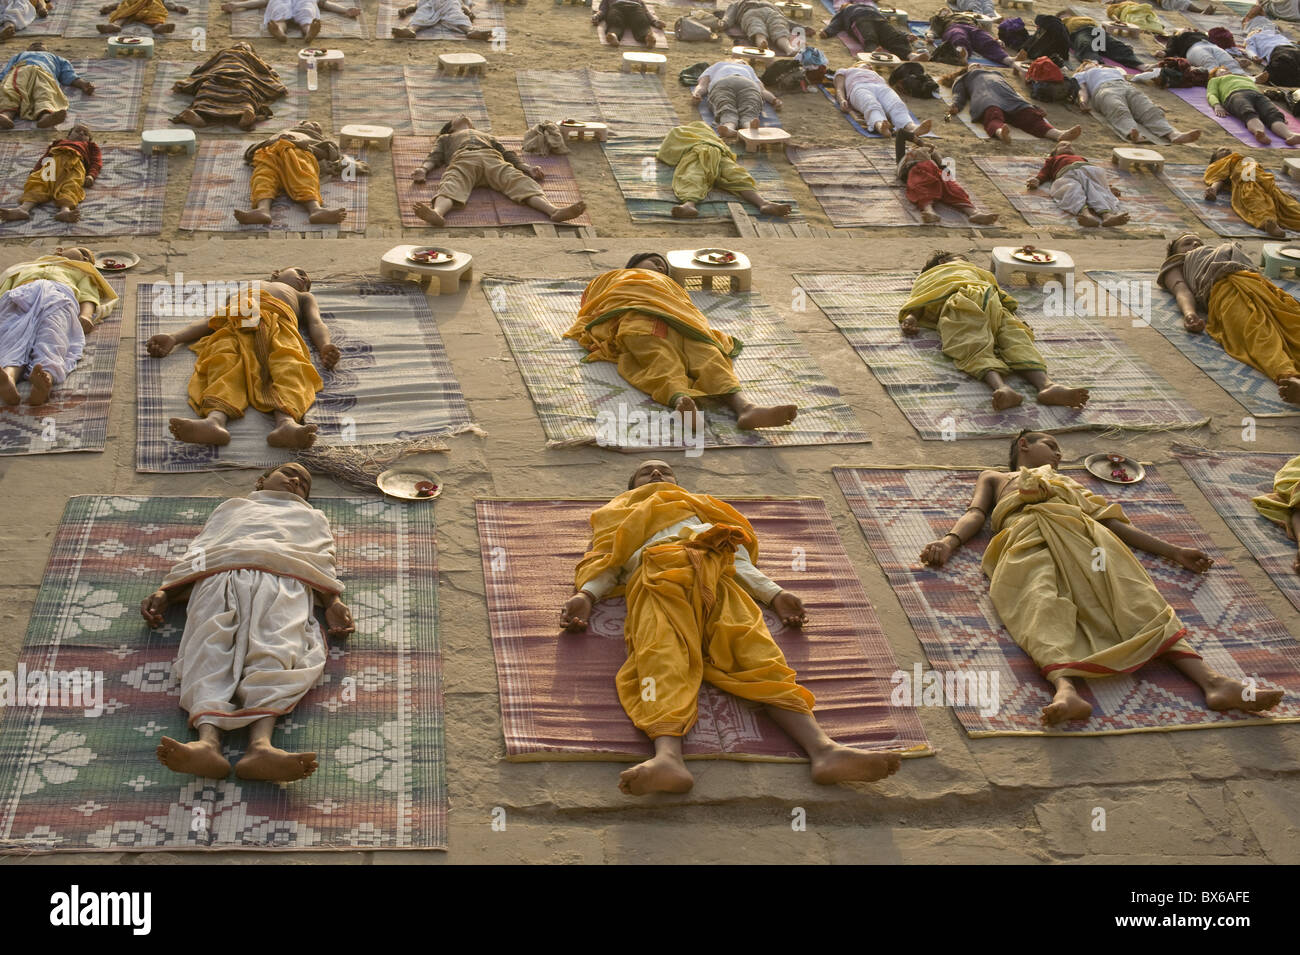 Students of Sanskrit school performing the savasana posture during daily yoga at sunrise, ghat of Varanasi, Uttar Pradesh, India Stock Photo